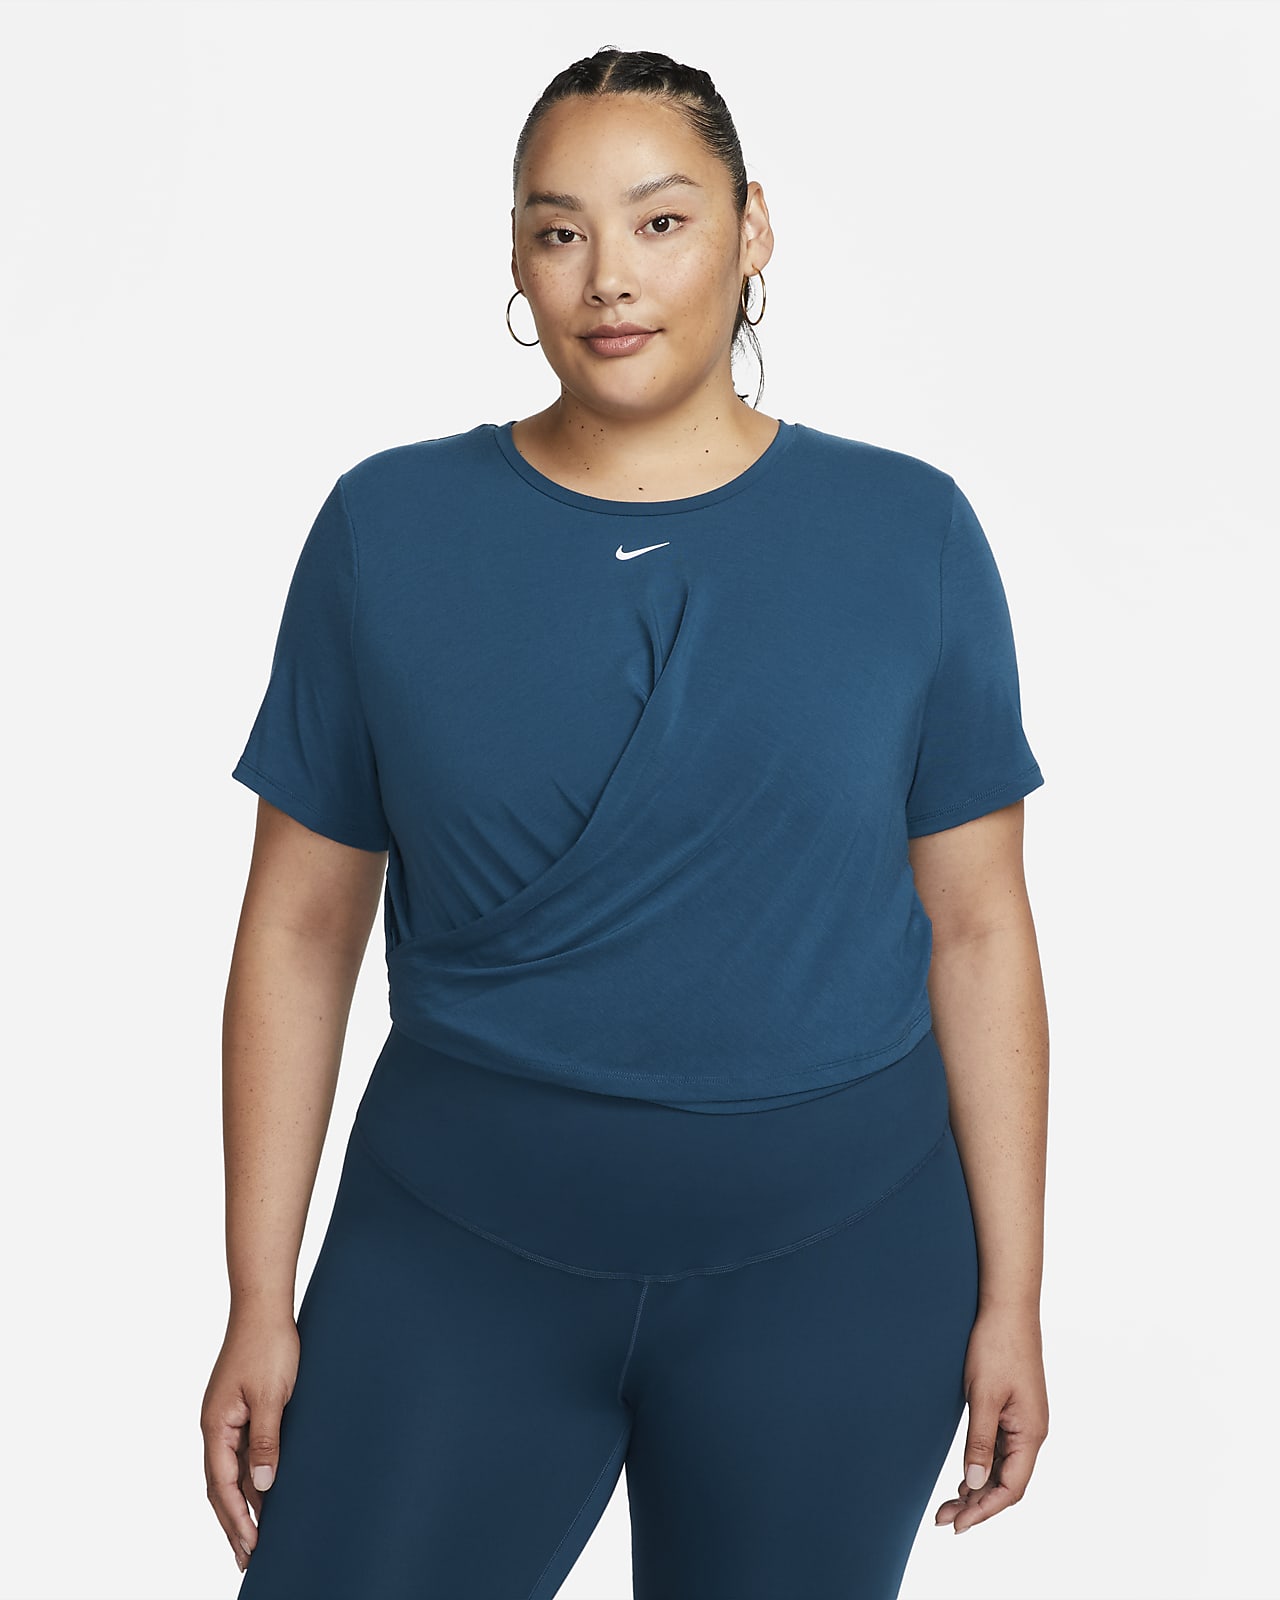 Nike Dri-FIT One Luxe Women's Twist Cropped Short-Sleeve Top (Plus Size)